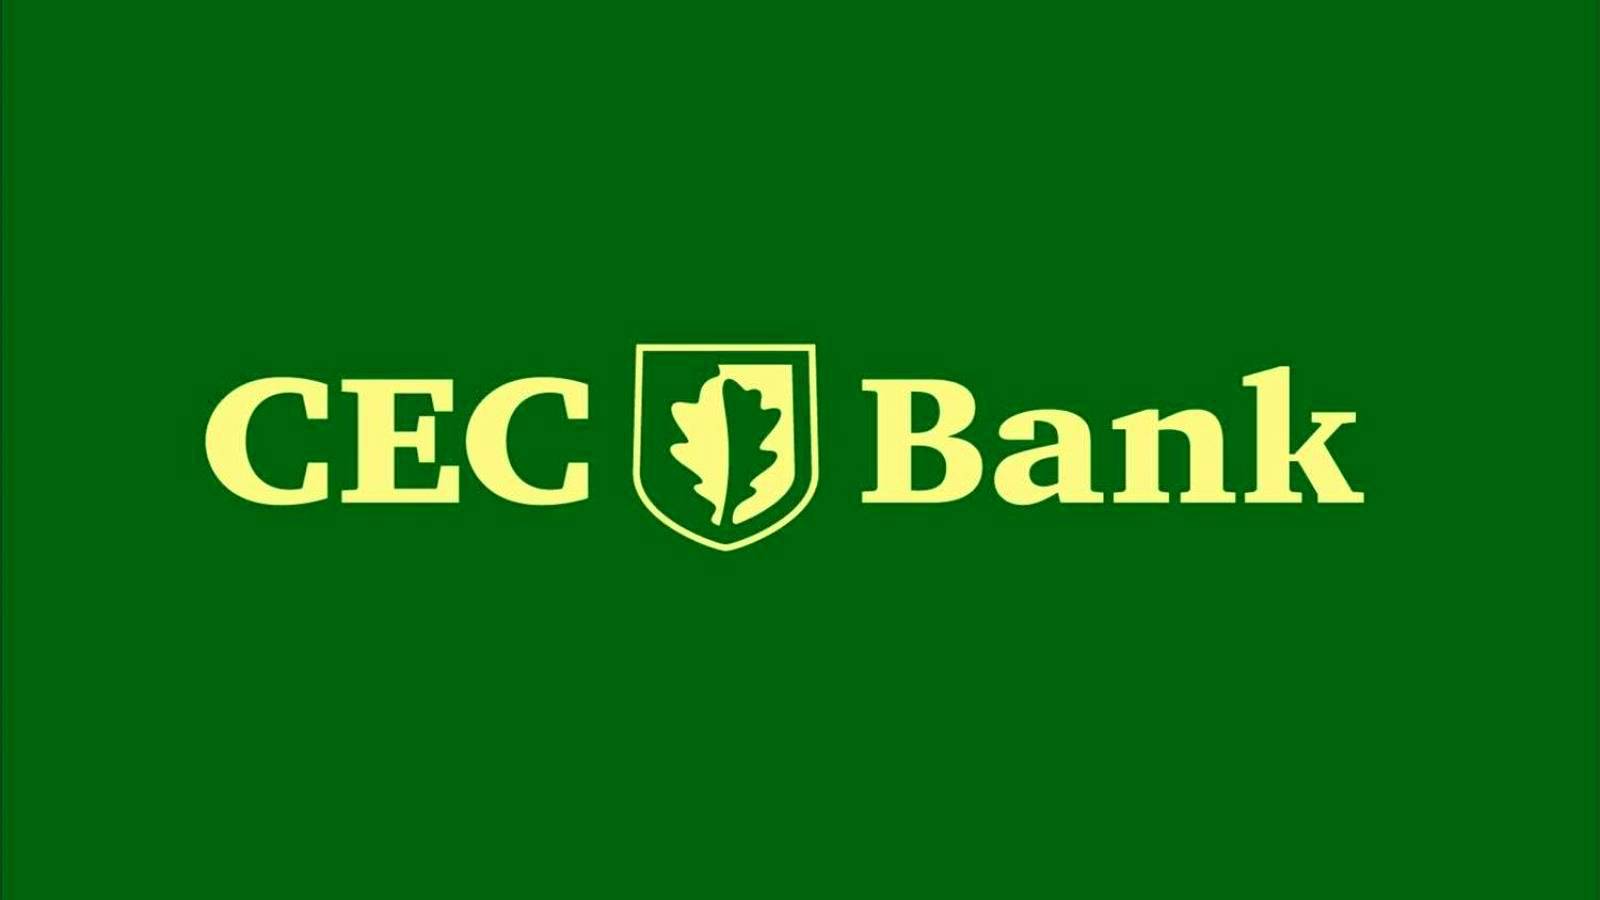 Otwarcie banku CEC